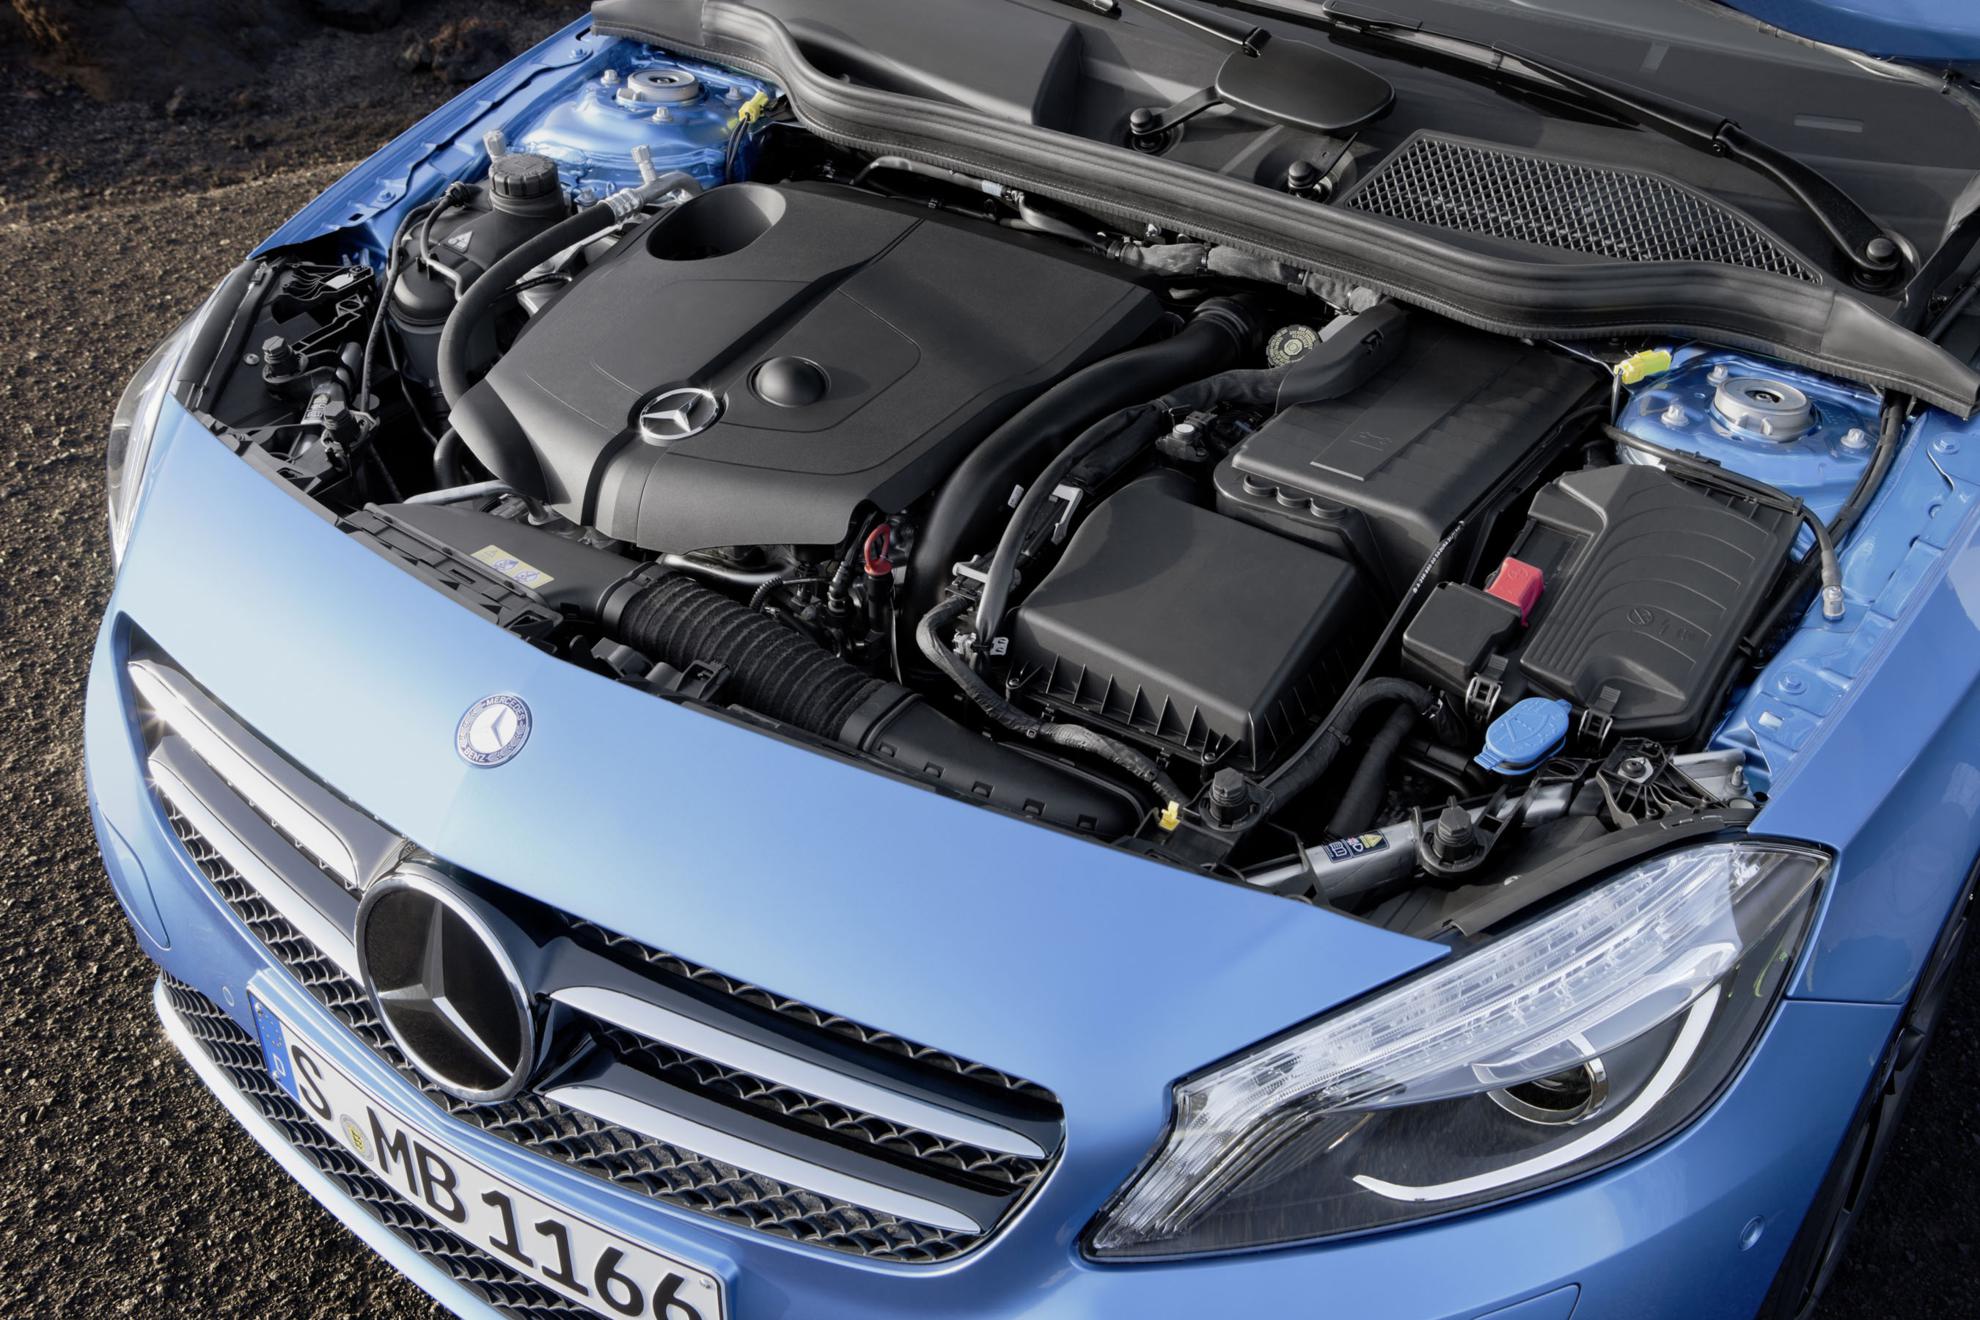 Mercedes Benz A-Class Petrol Engines